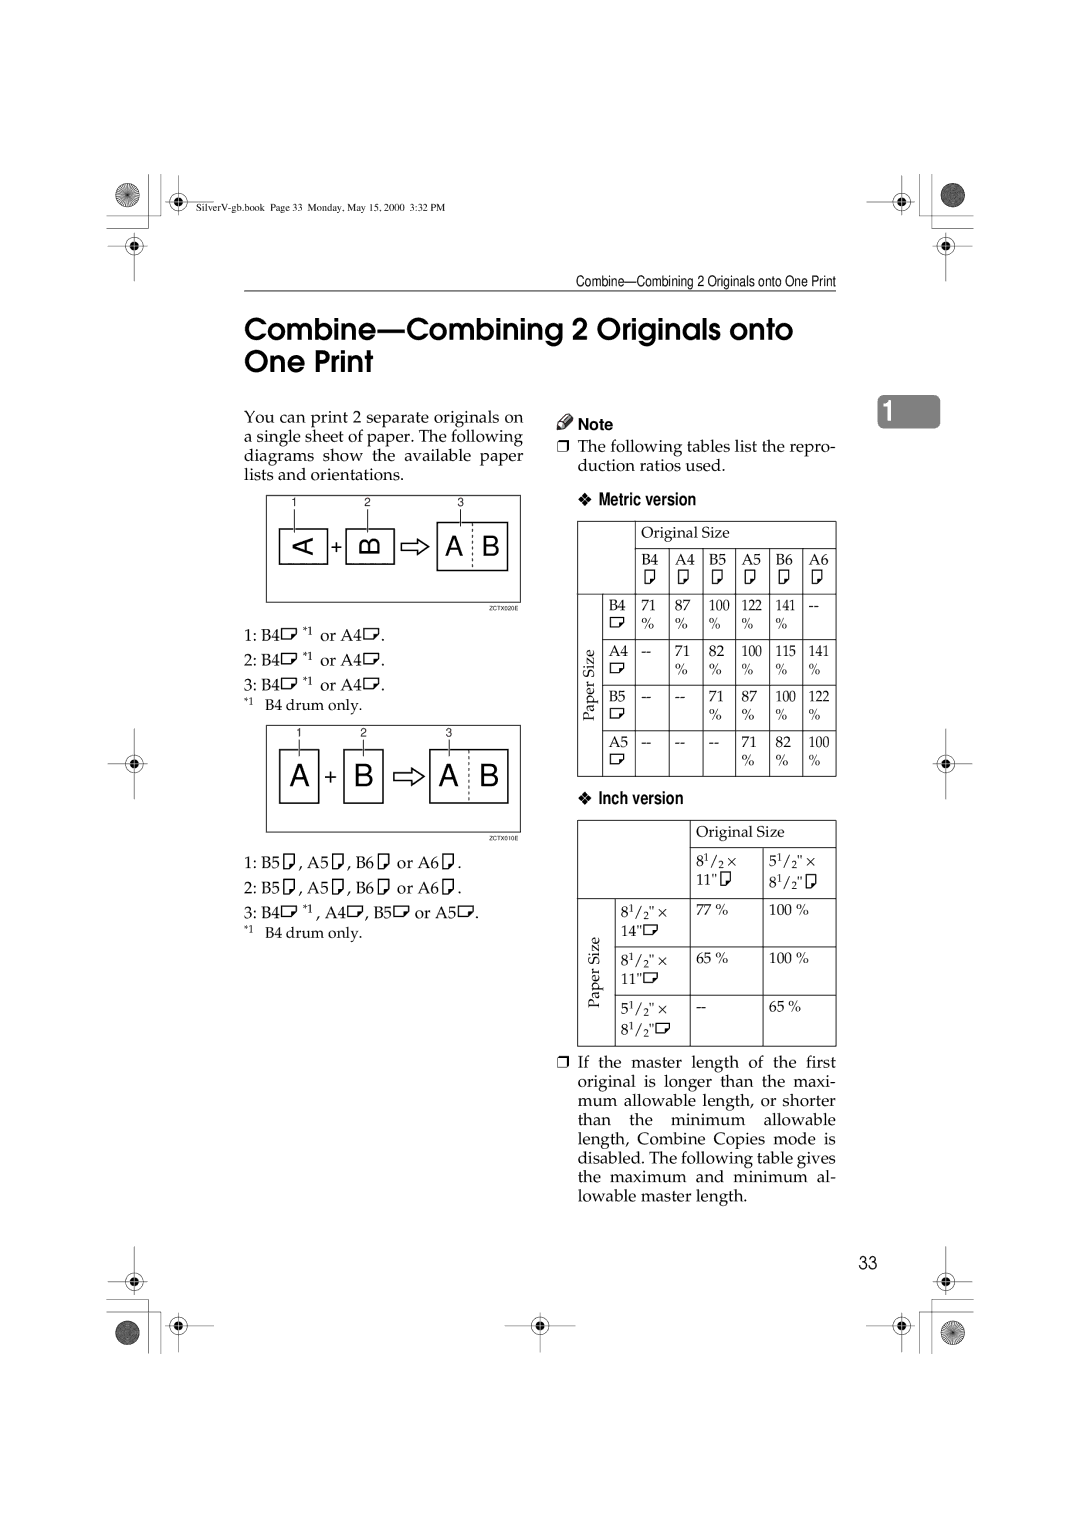 Ricoh JP1210/1250, Priport manual Combine-Combining 2 Originals onto One Print, Metric version, Inch version 